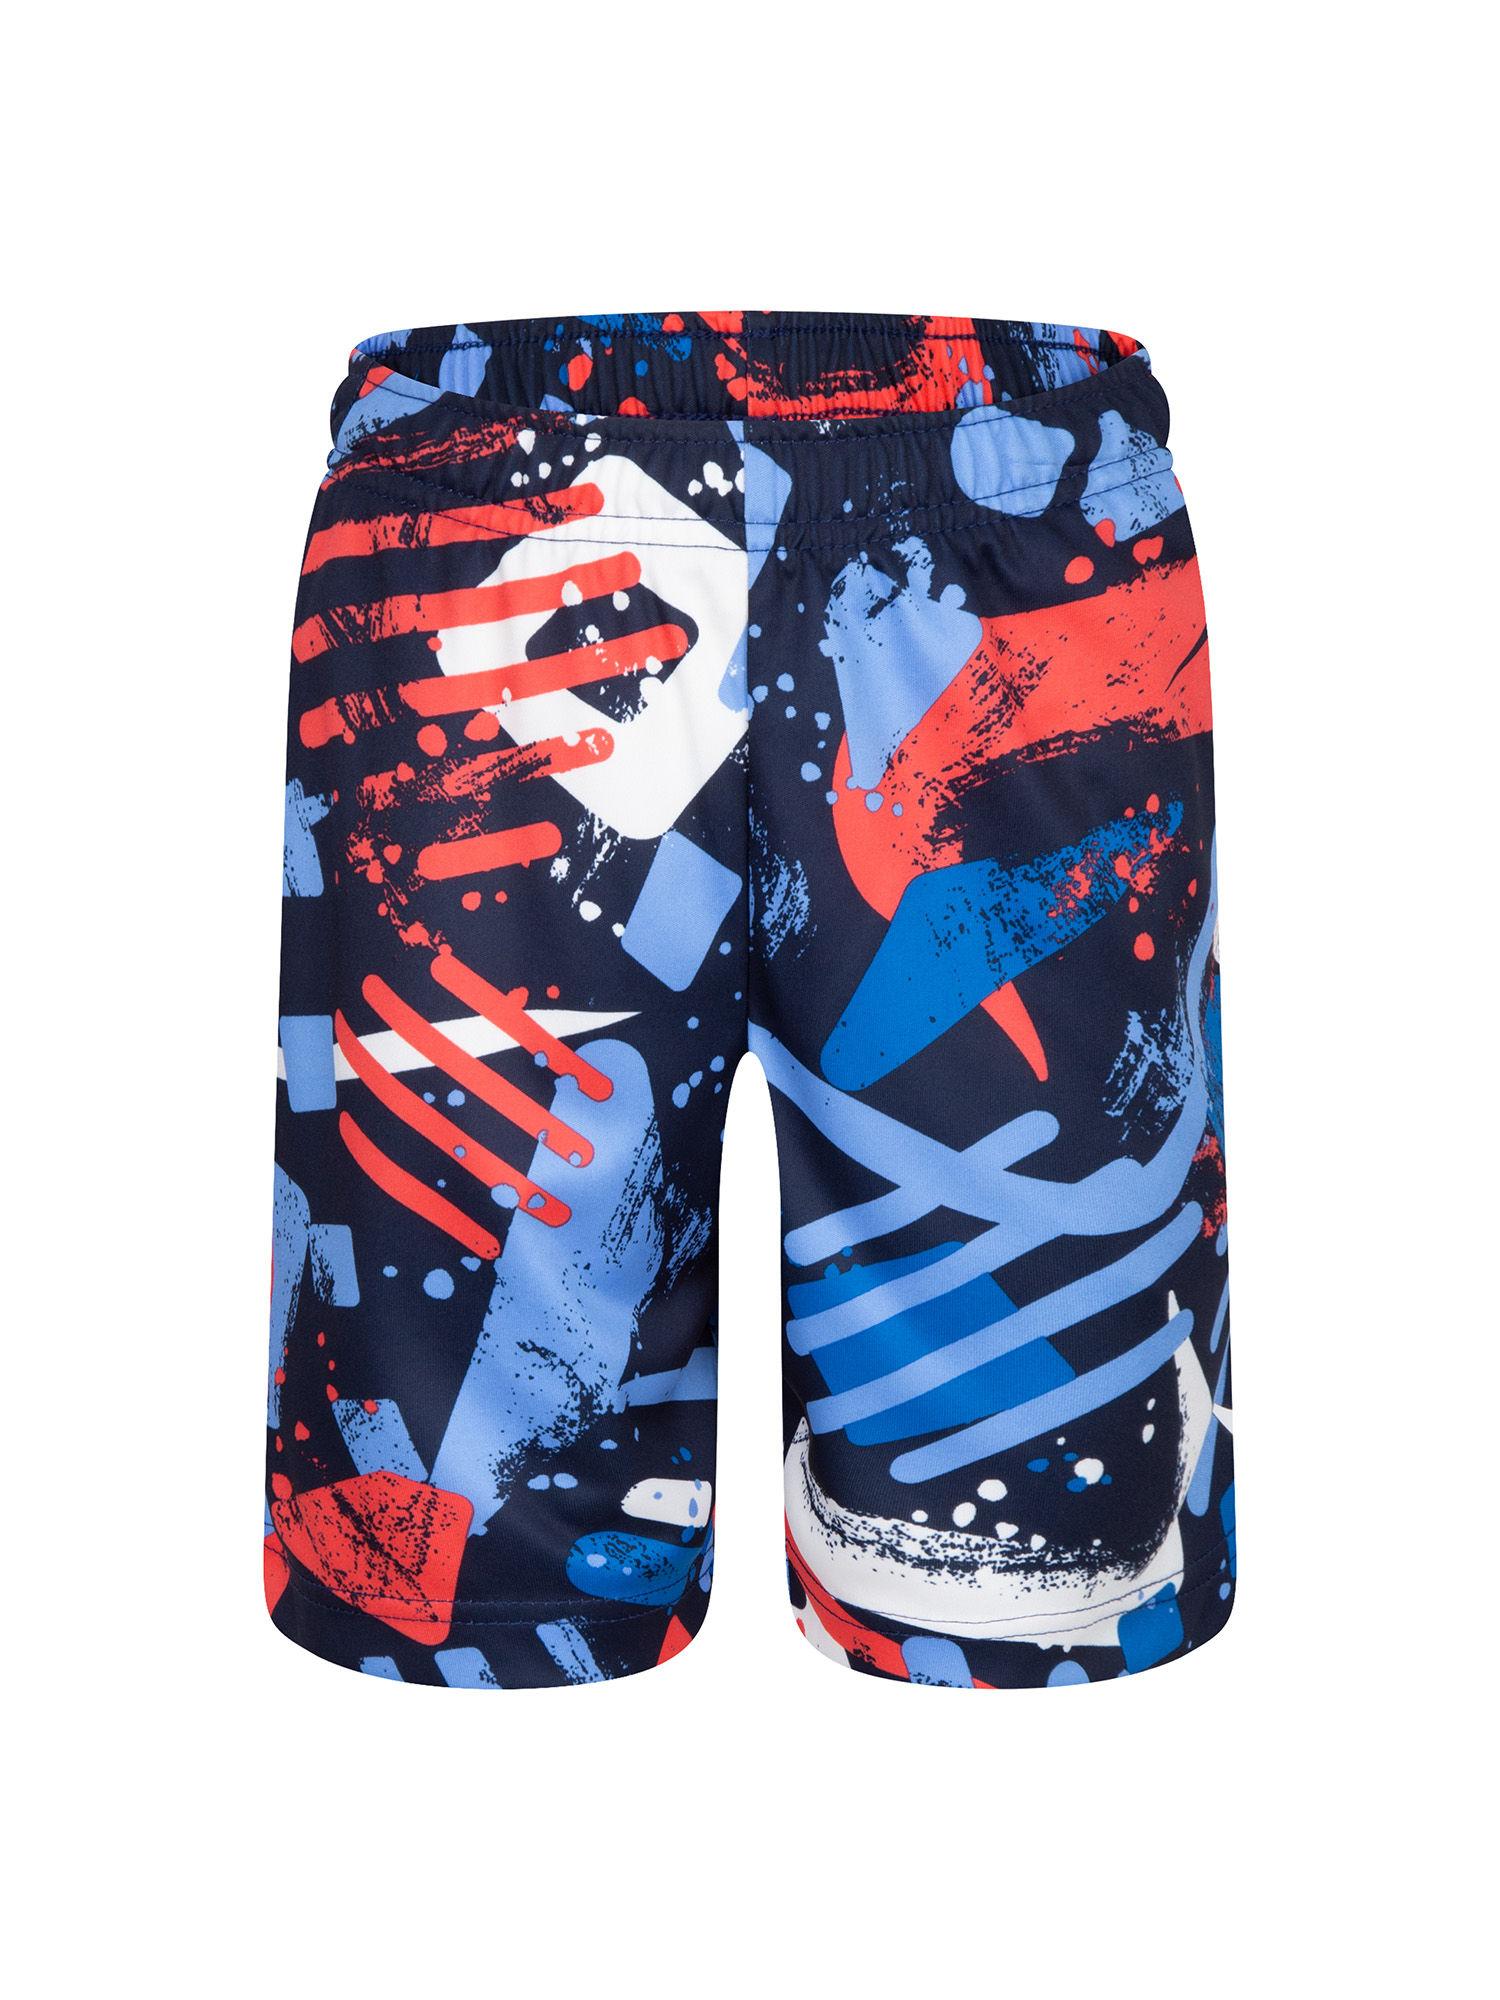 Boys Navy Blue Printed Shorts